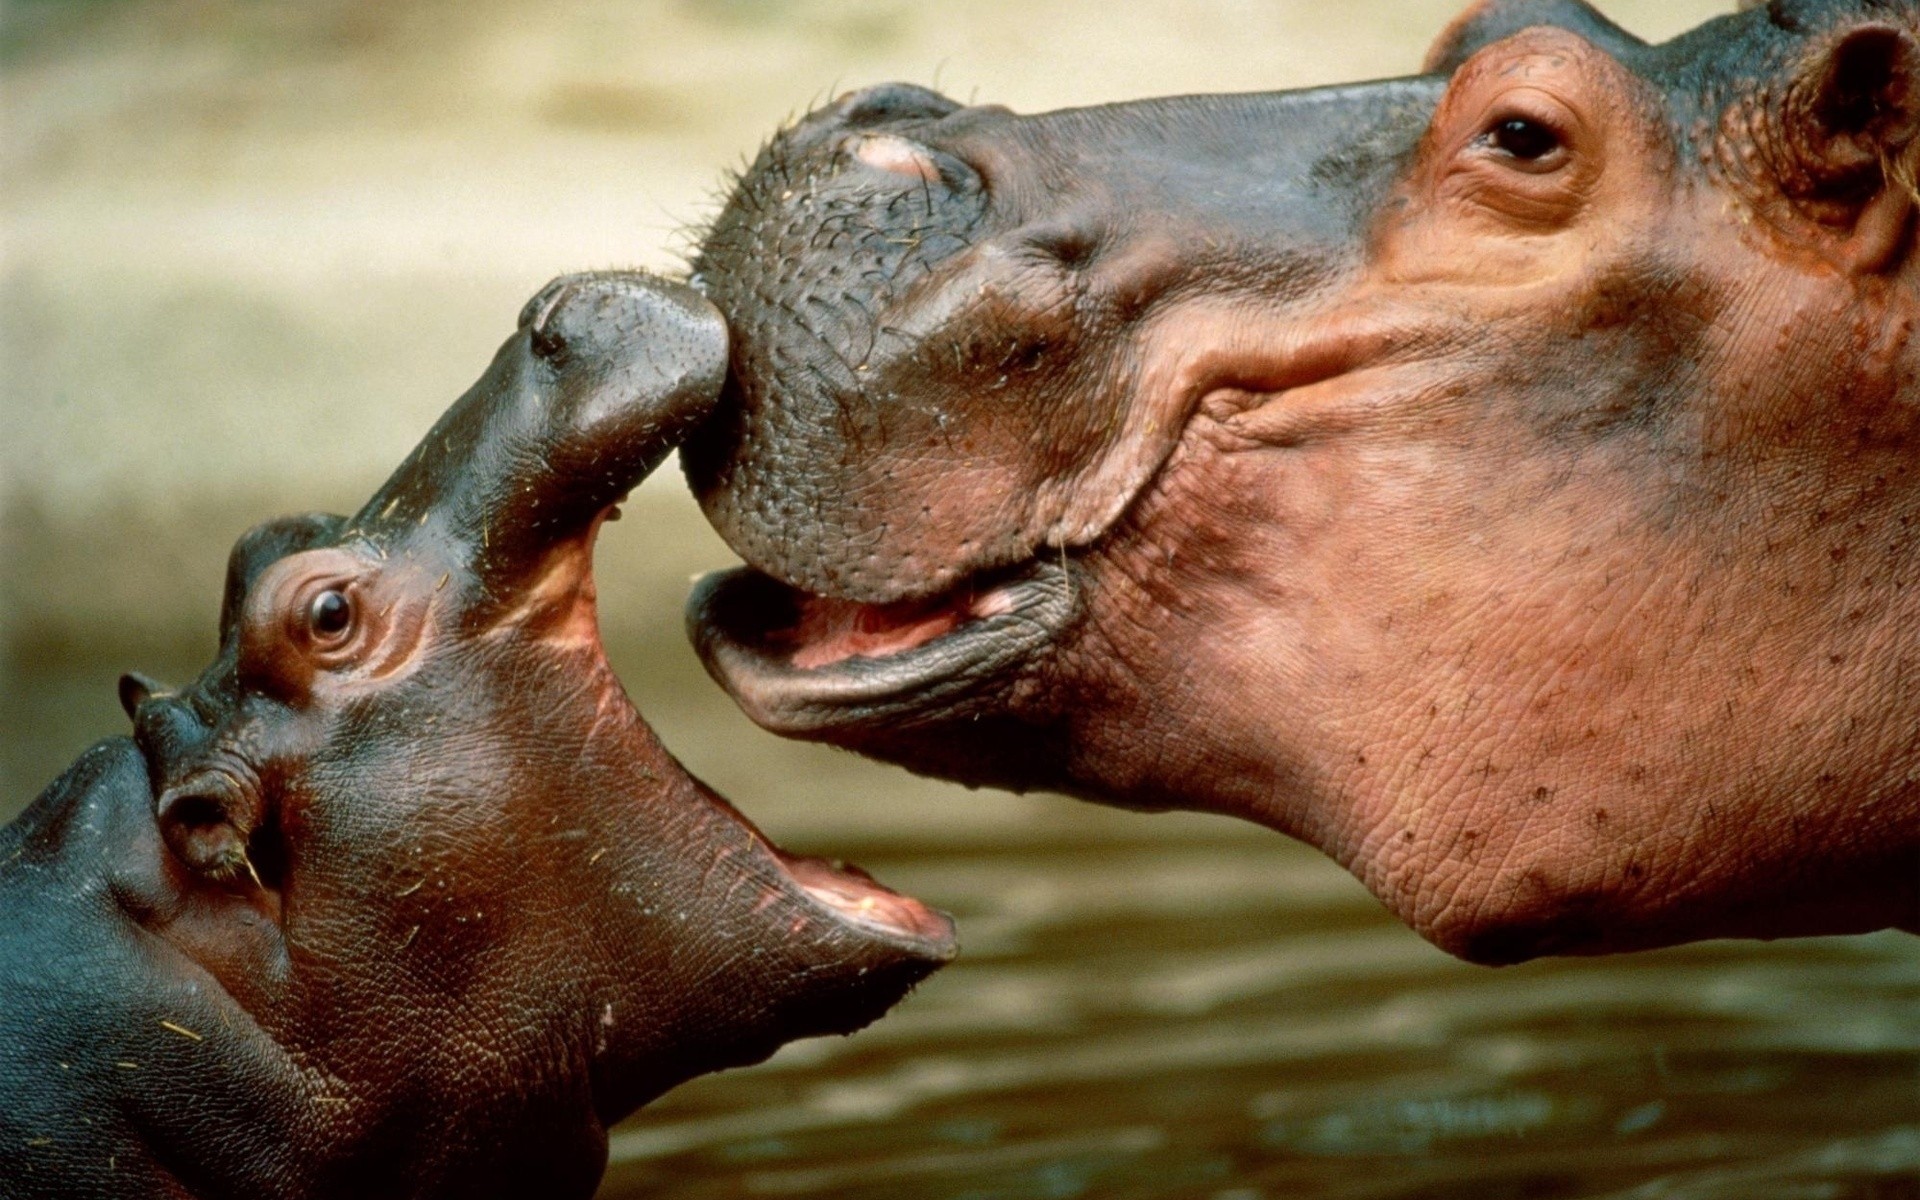 animals mammal wildlife hippopotamus zoo portrait tropical nature animal one wet water face head mouth hippo